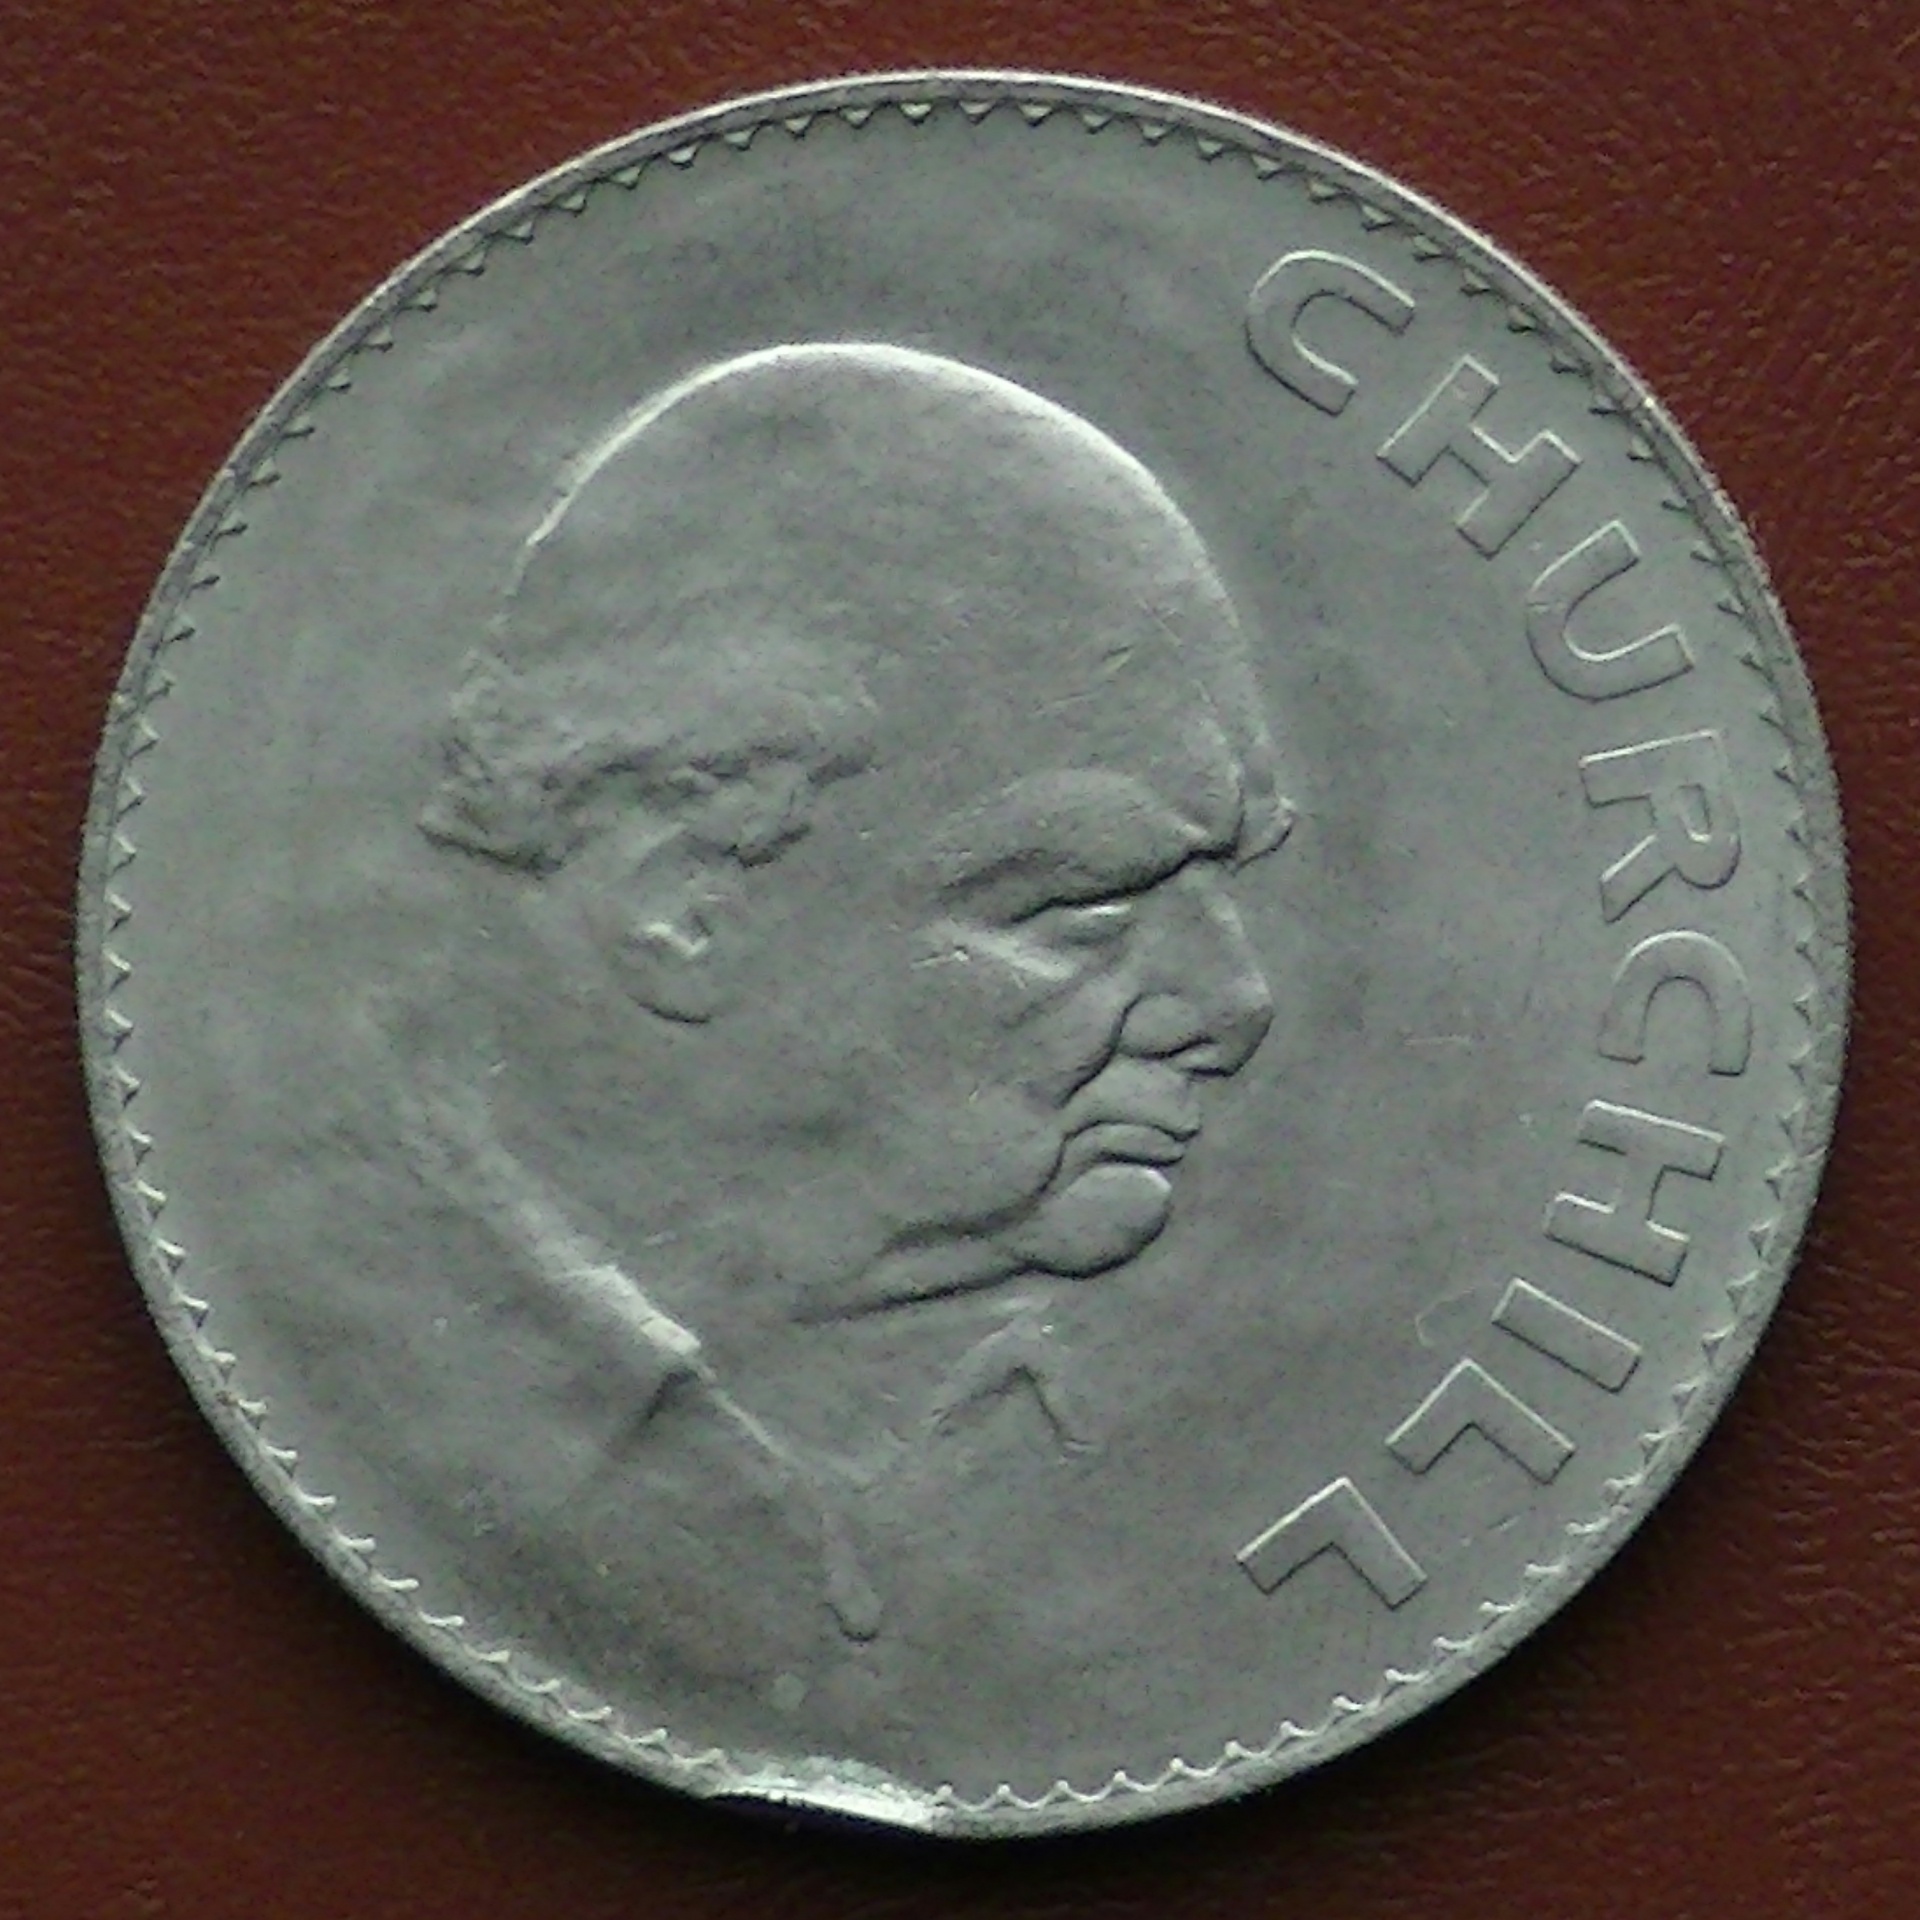 1965 Churchill Elizabeth Coin